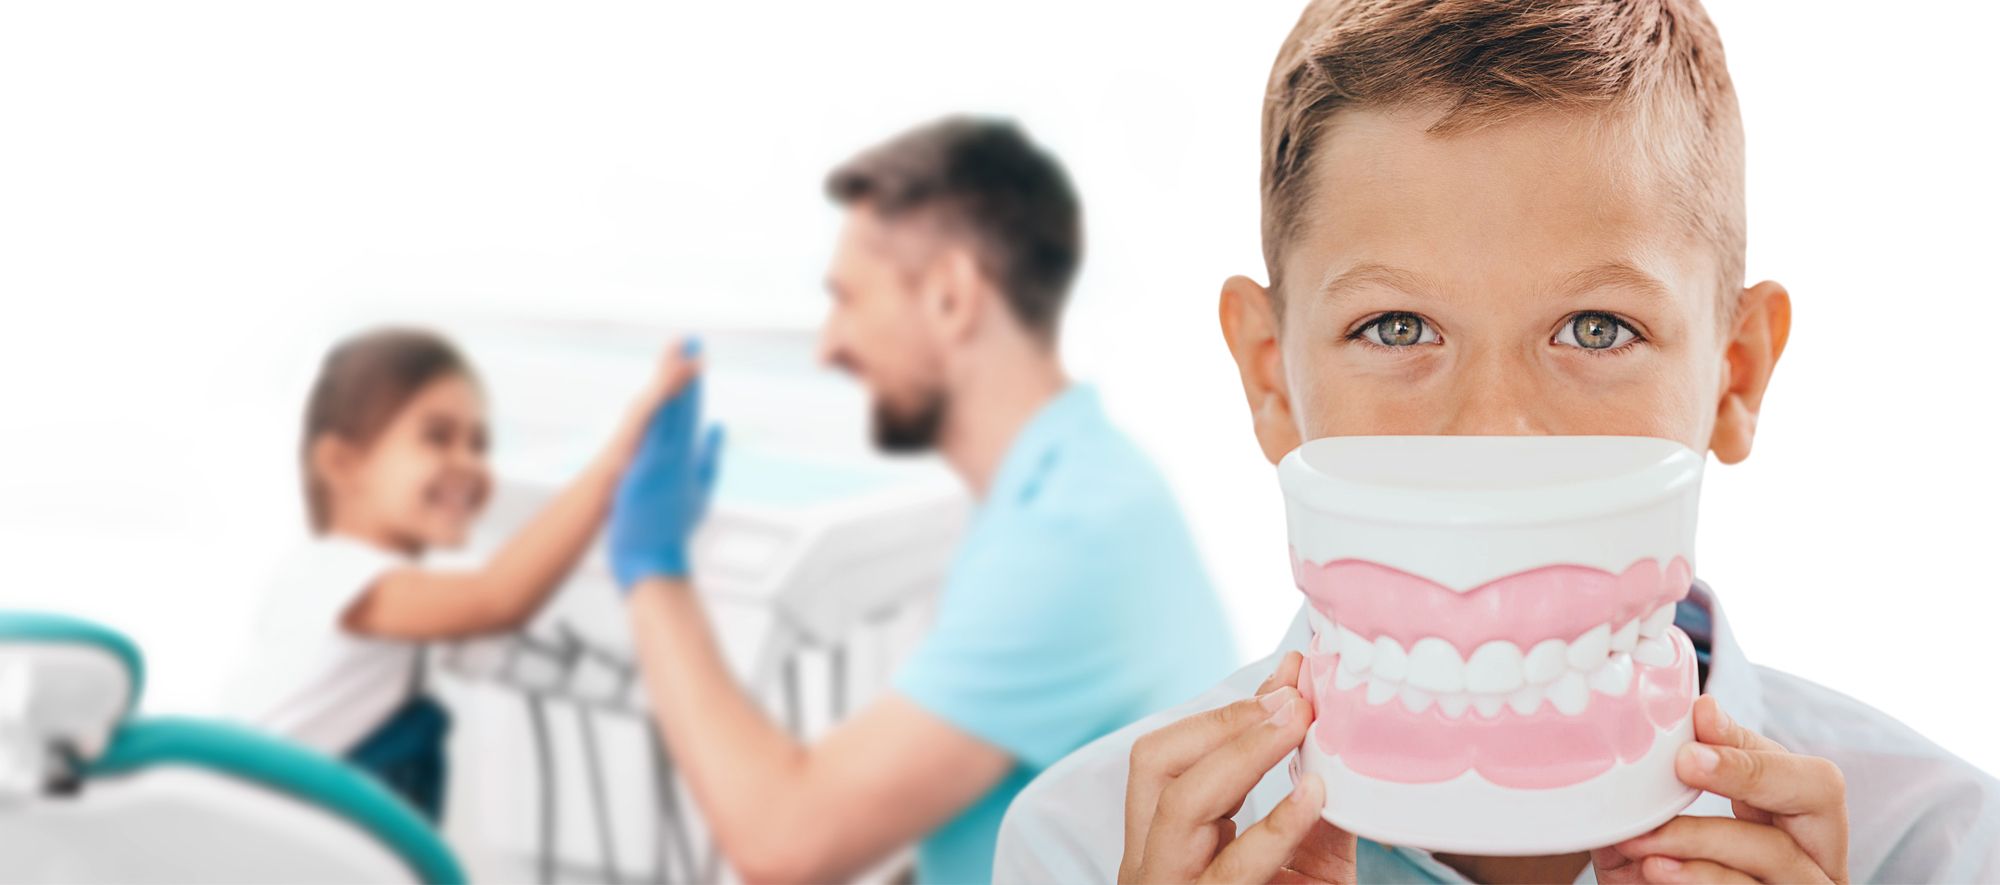 Top 5 Ways to Make Pediatric Dentistry More Fun. Photo courtesy of Peakstock/stock.adobe.com. 